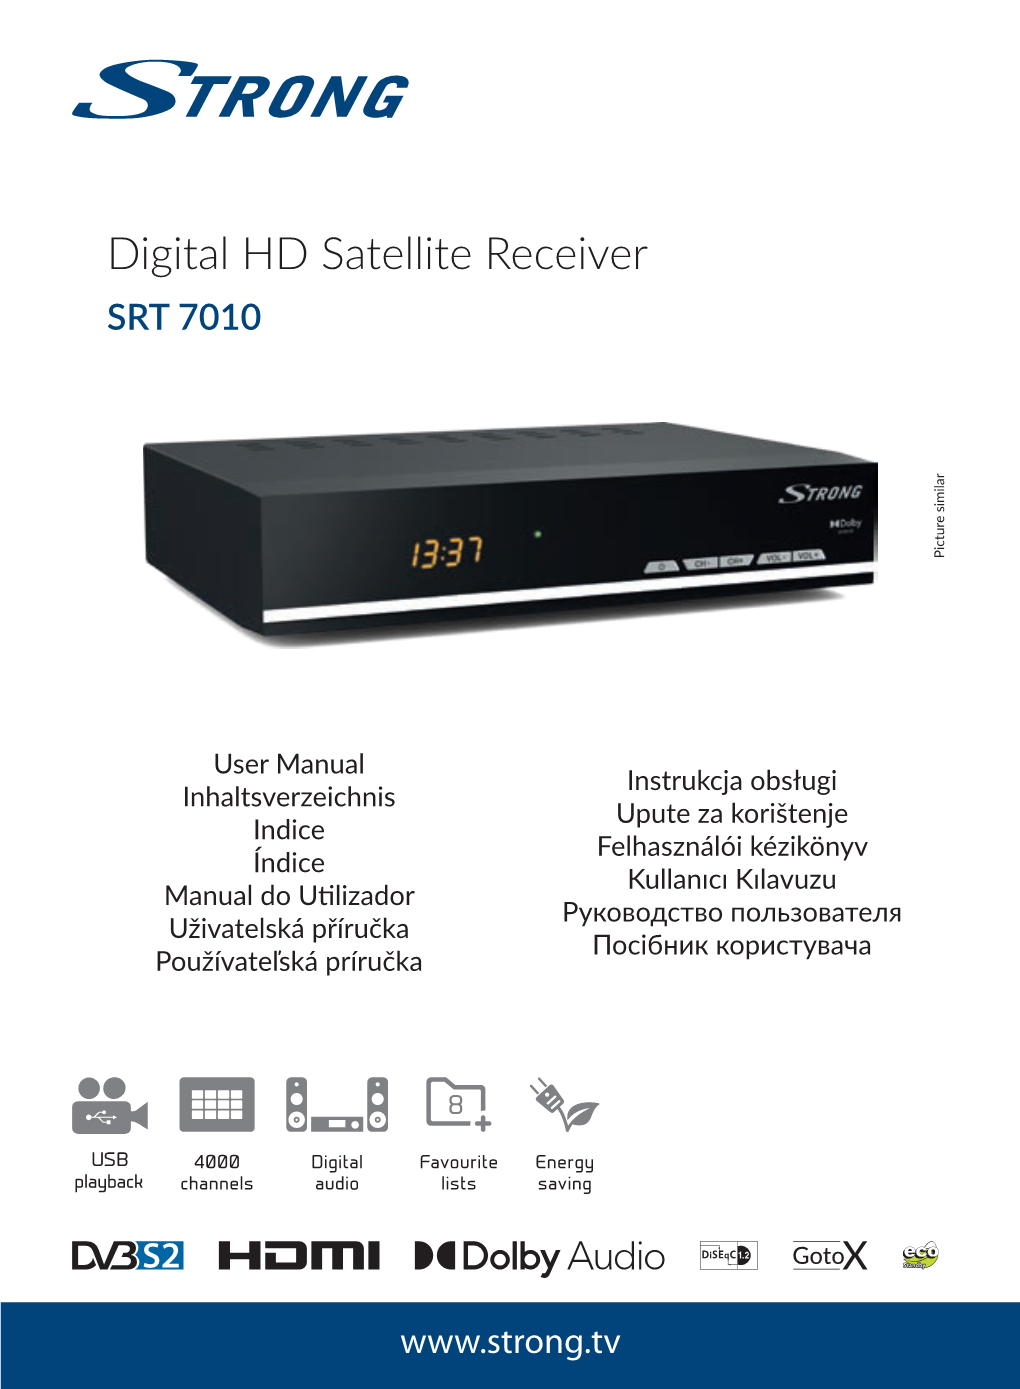 Digital HD Satellite Receiver SRT 7010 Picture Similar Picture